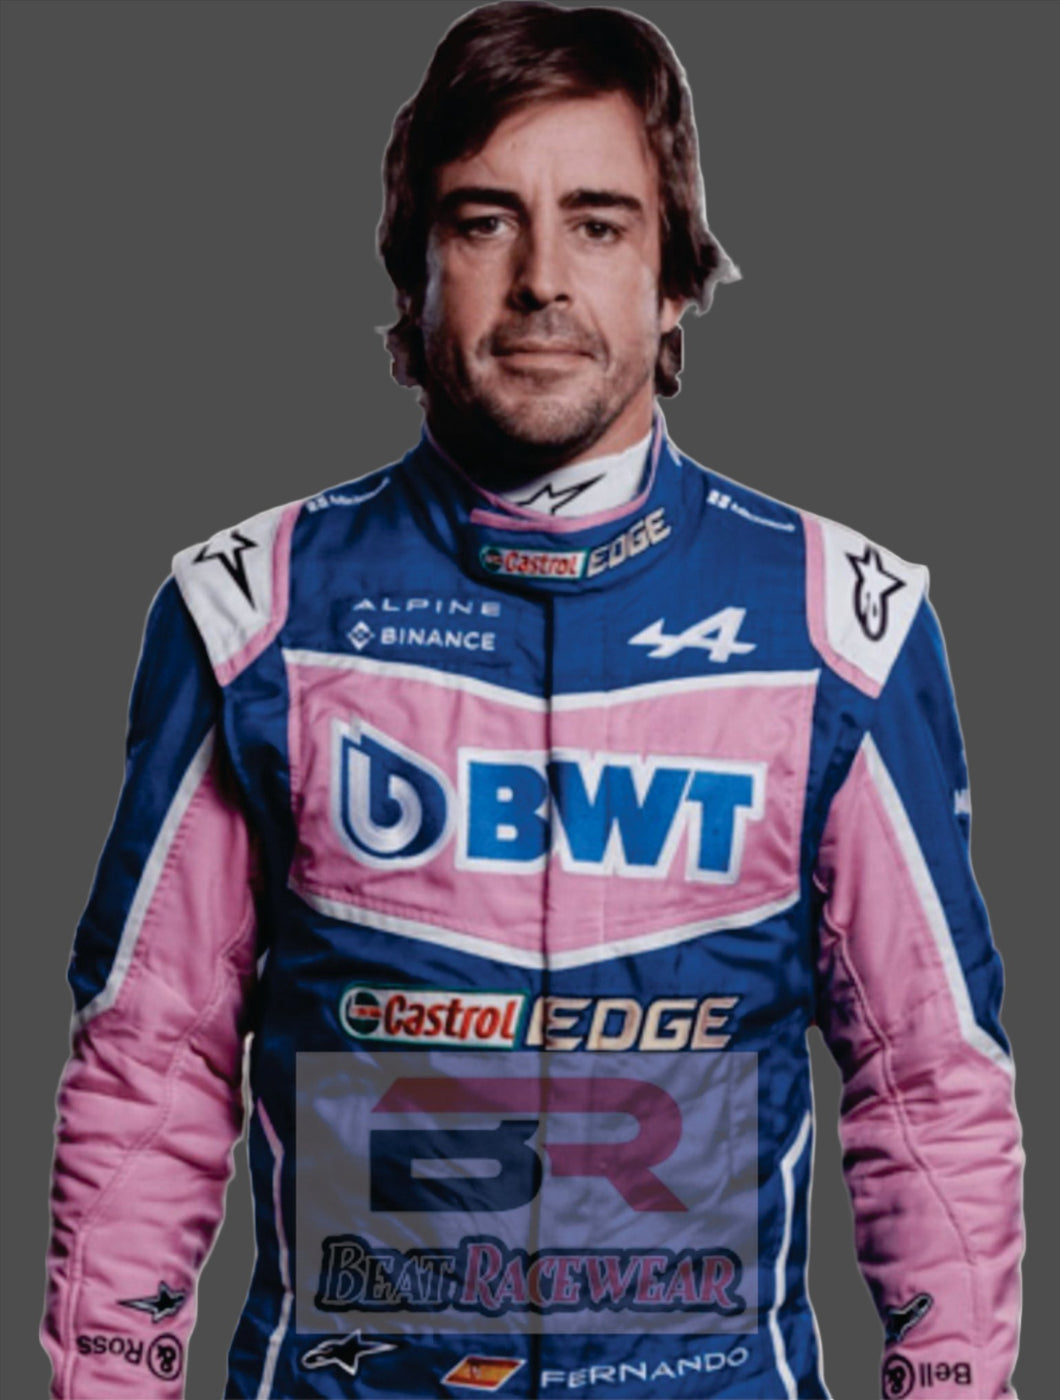 Fernando Alonso 2021 race suit